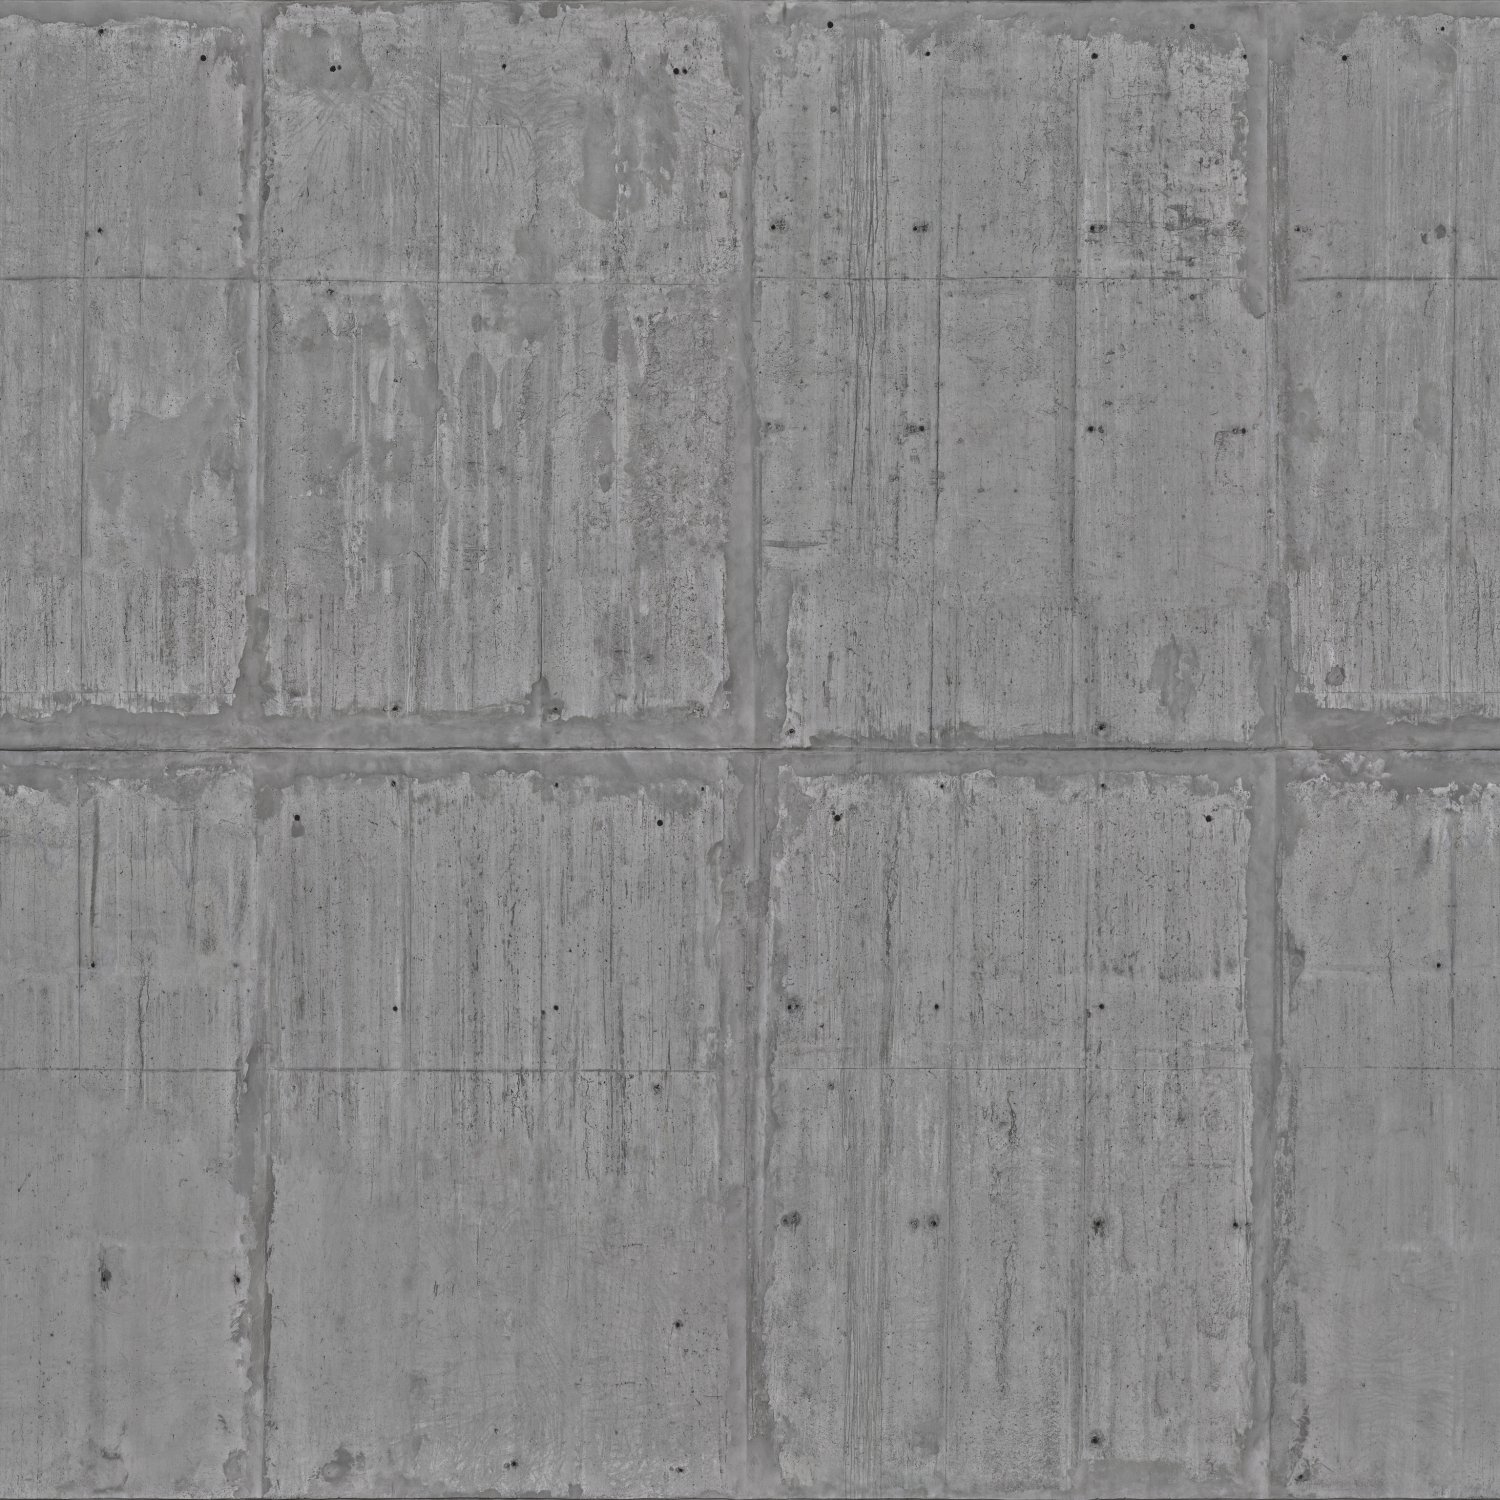 Ultra HD concrete runway textures